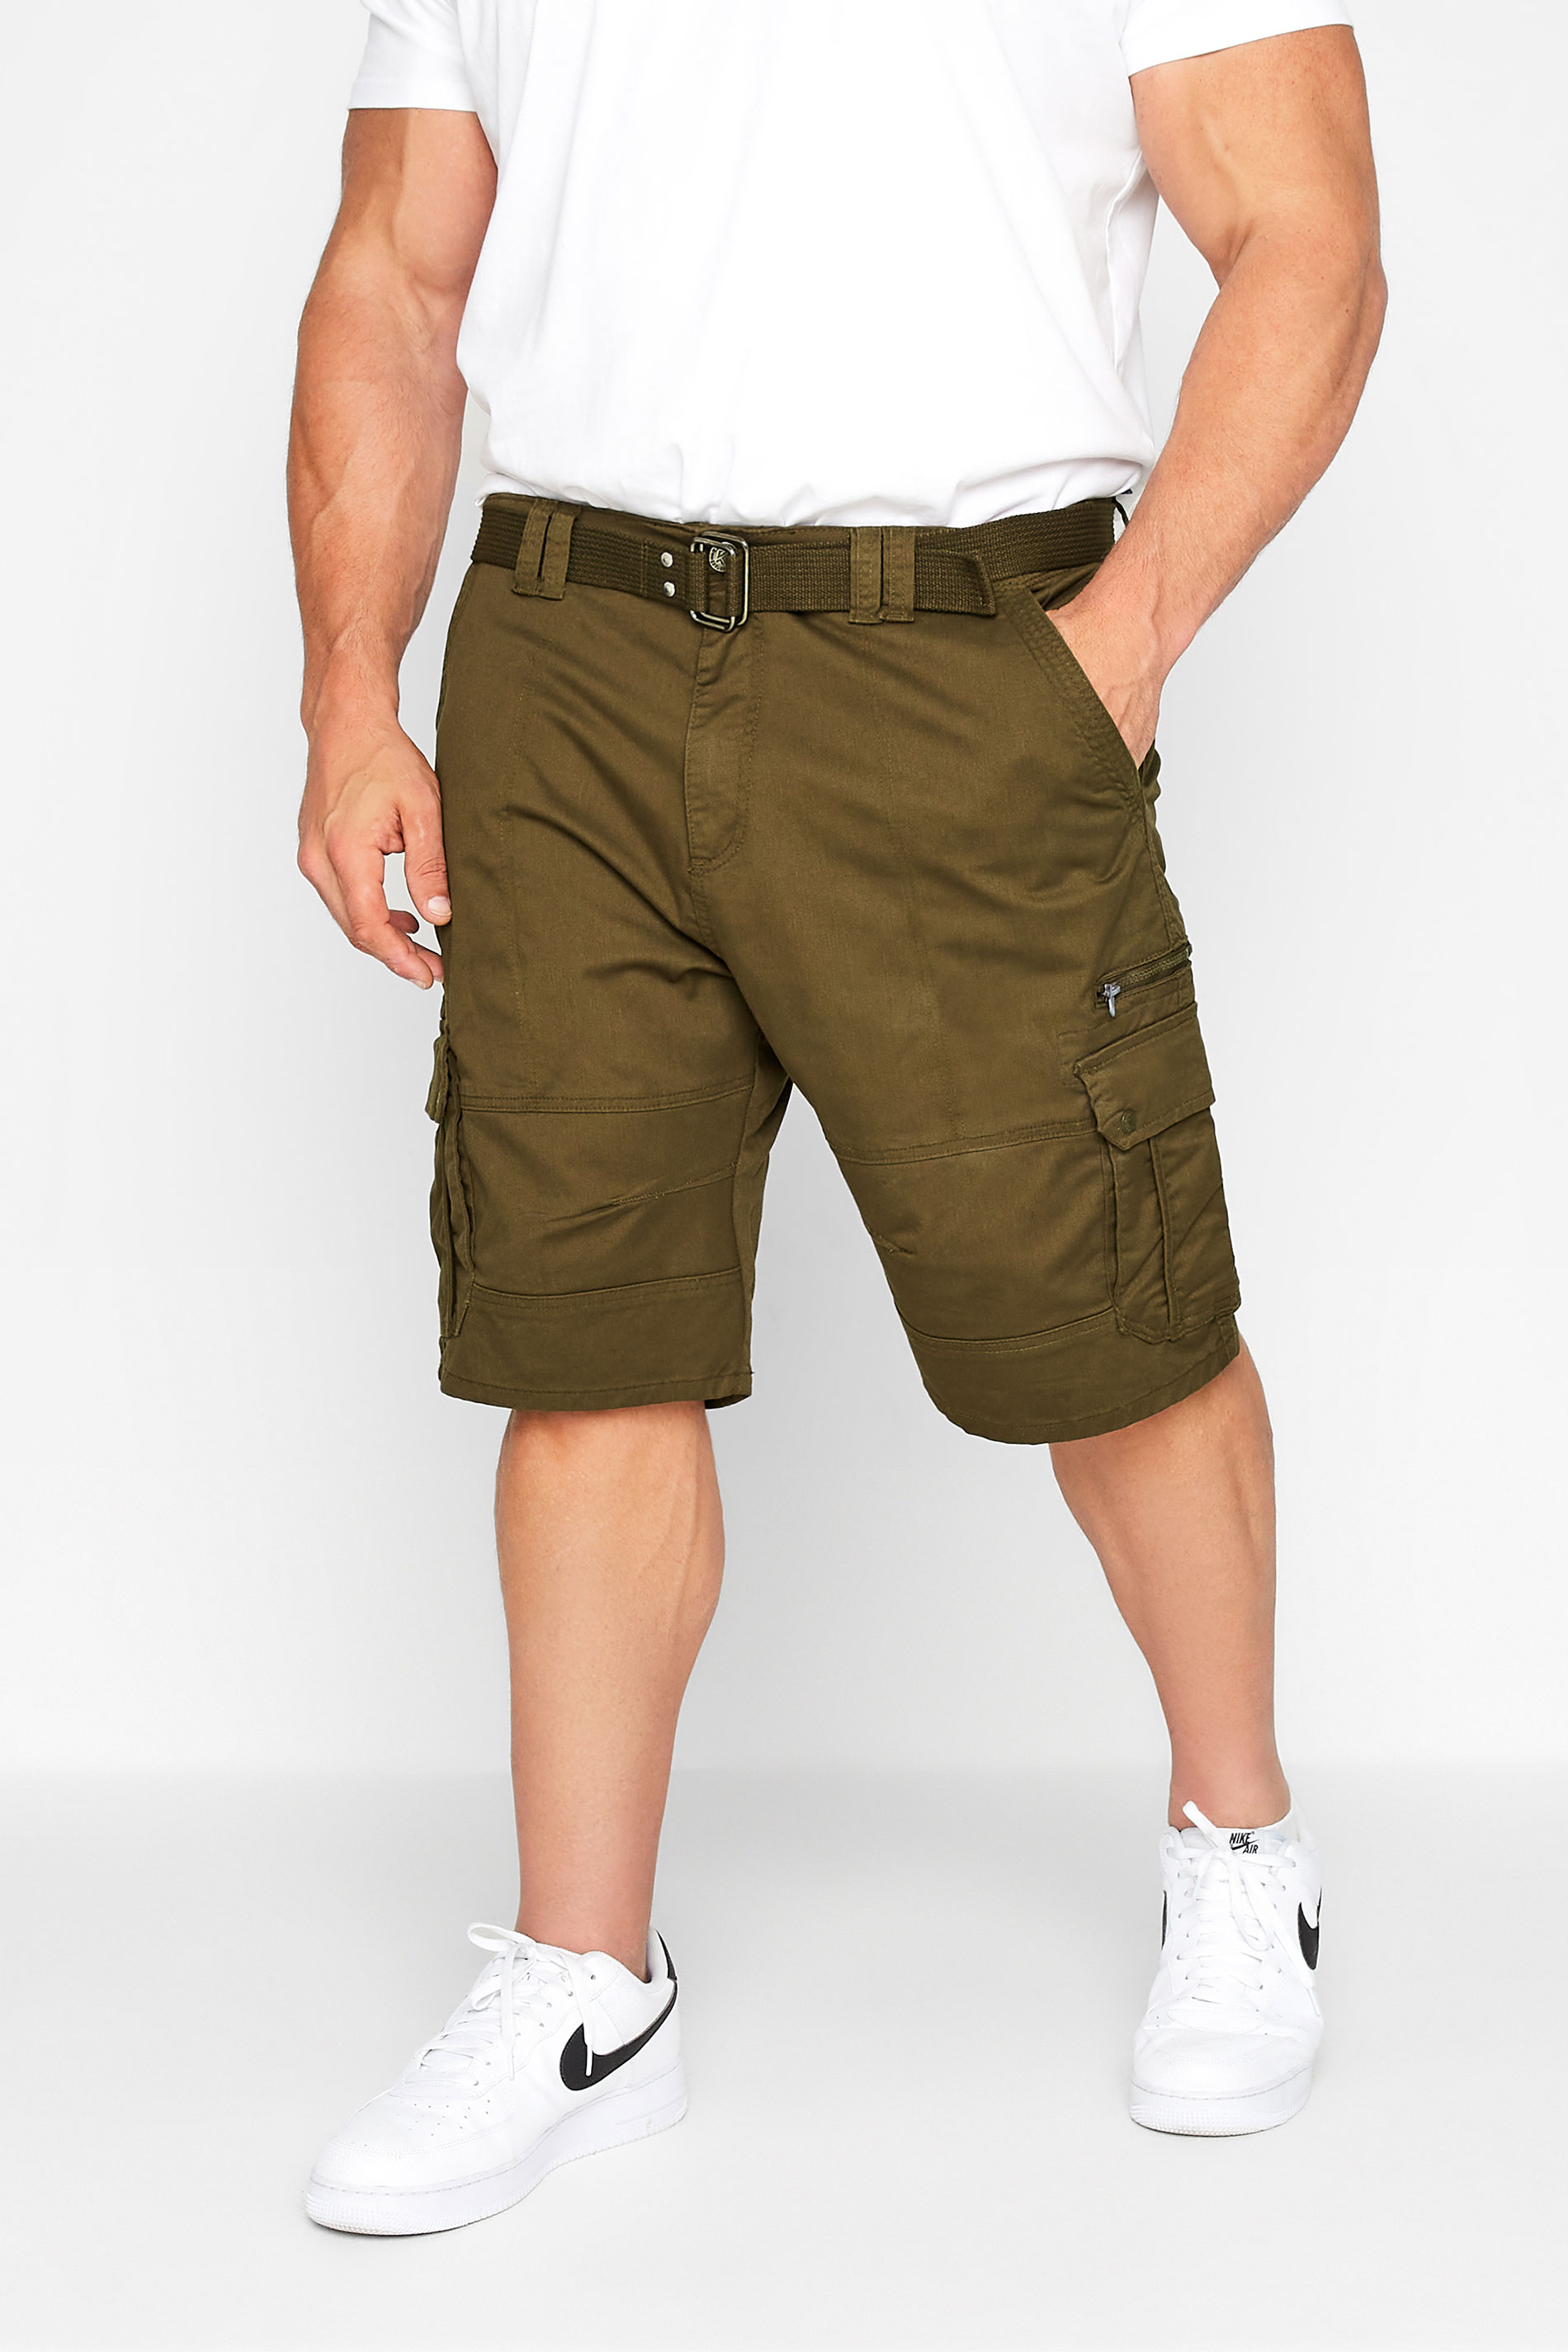 KAM Big & Tall Khaki Green Canvas Cargo Shorts